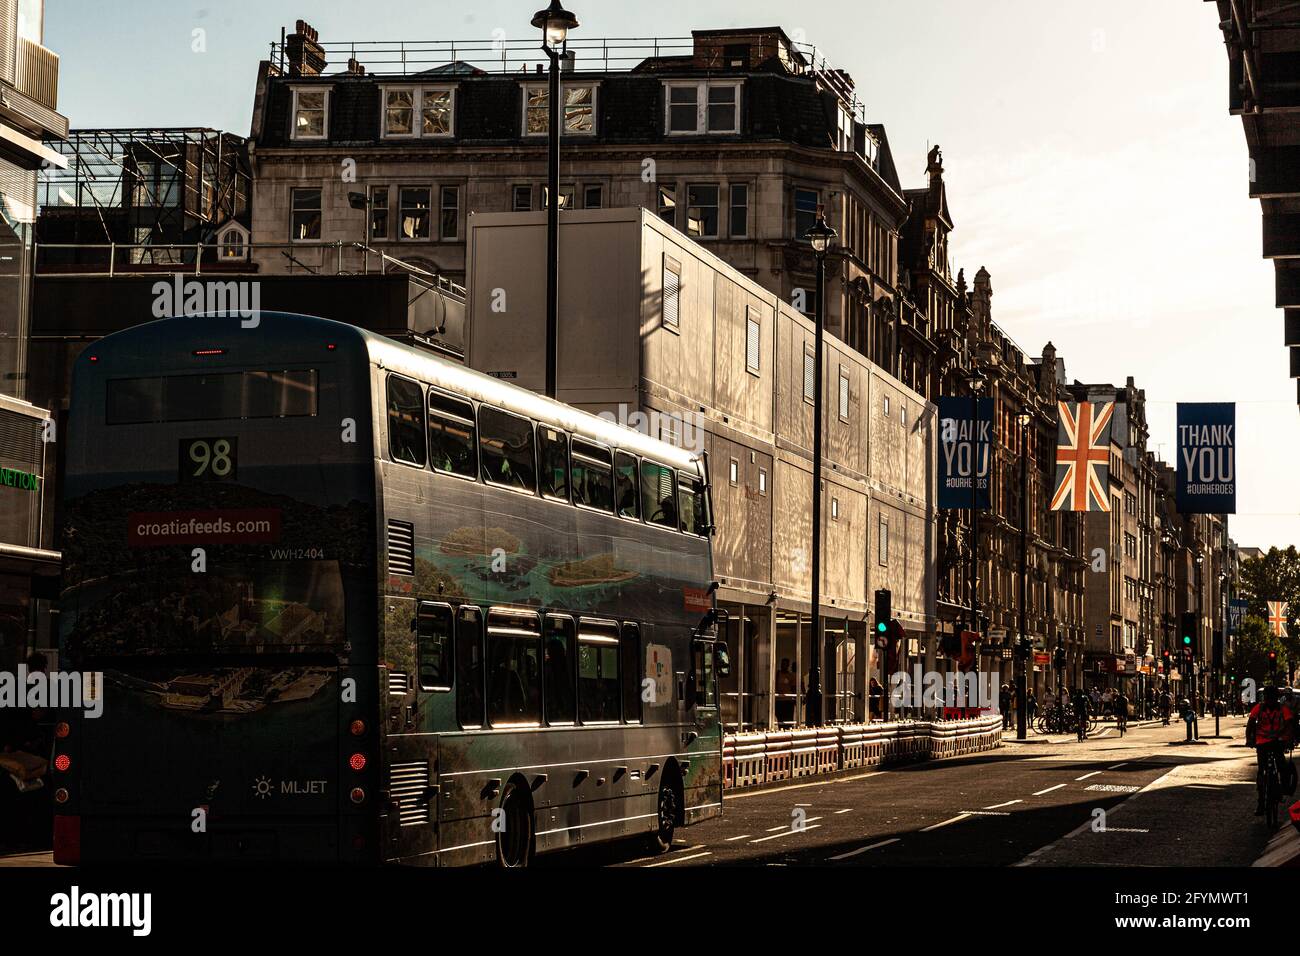 A double decker bus running along Oxford street, London, England, UK. Stock Photo